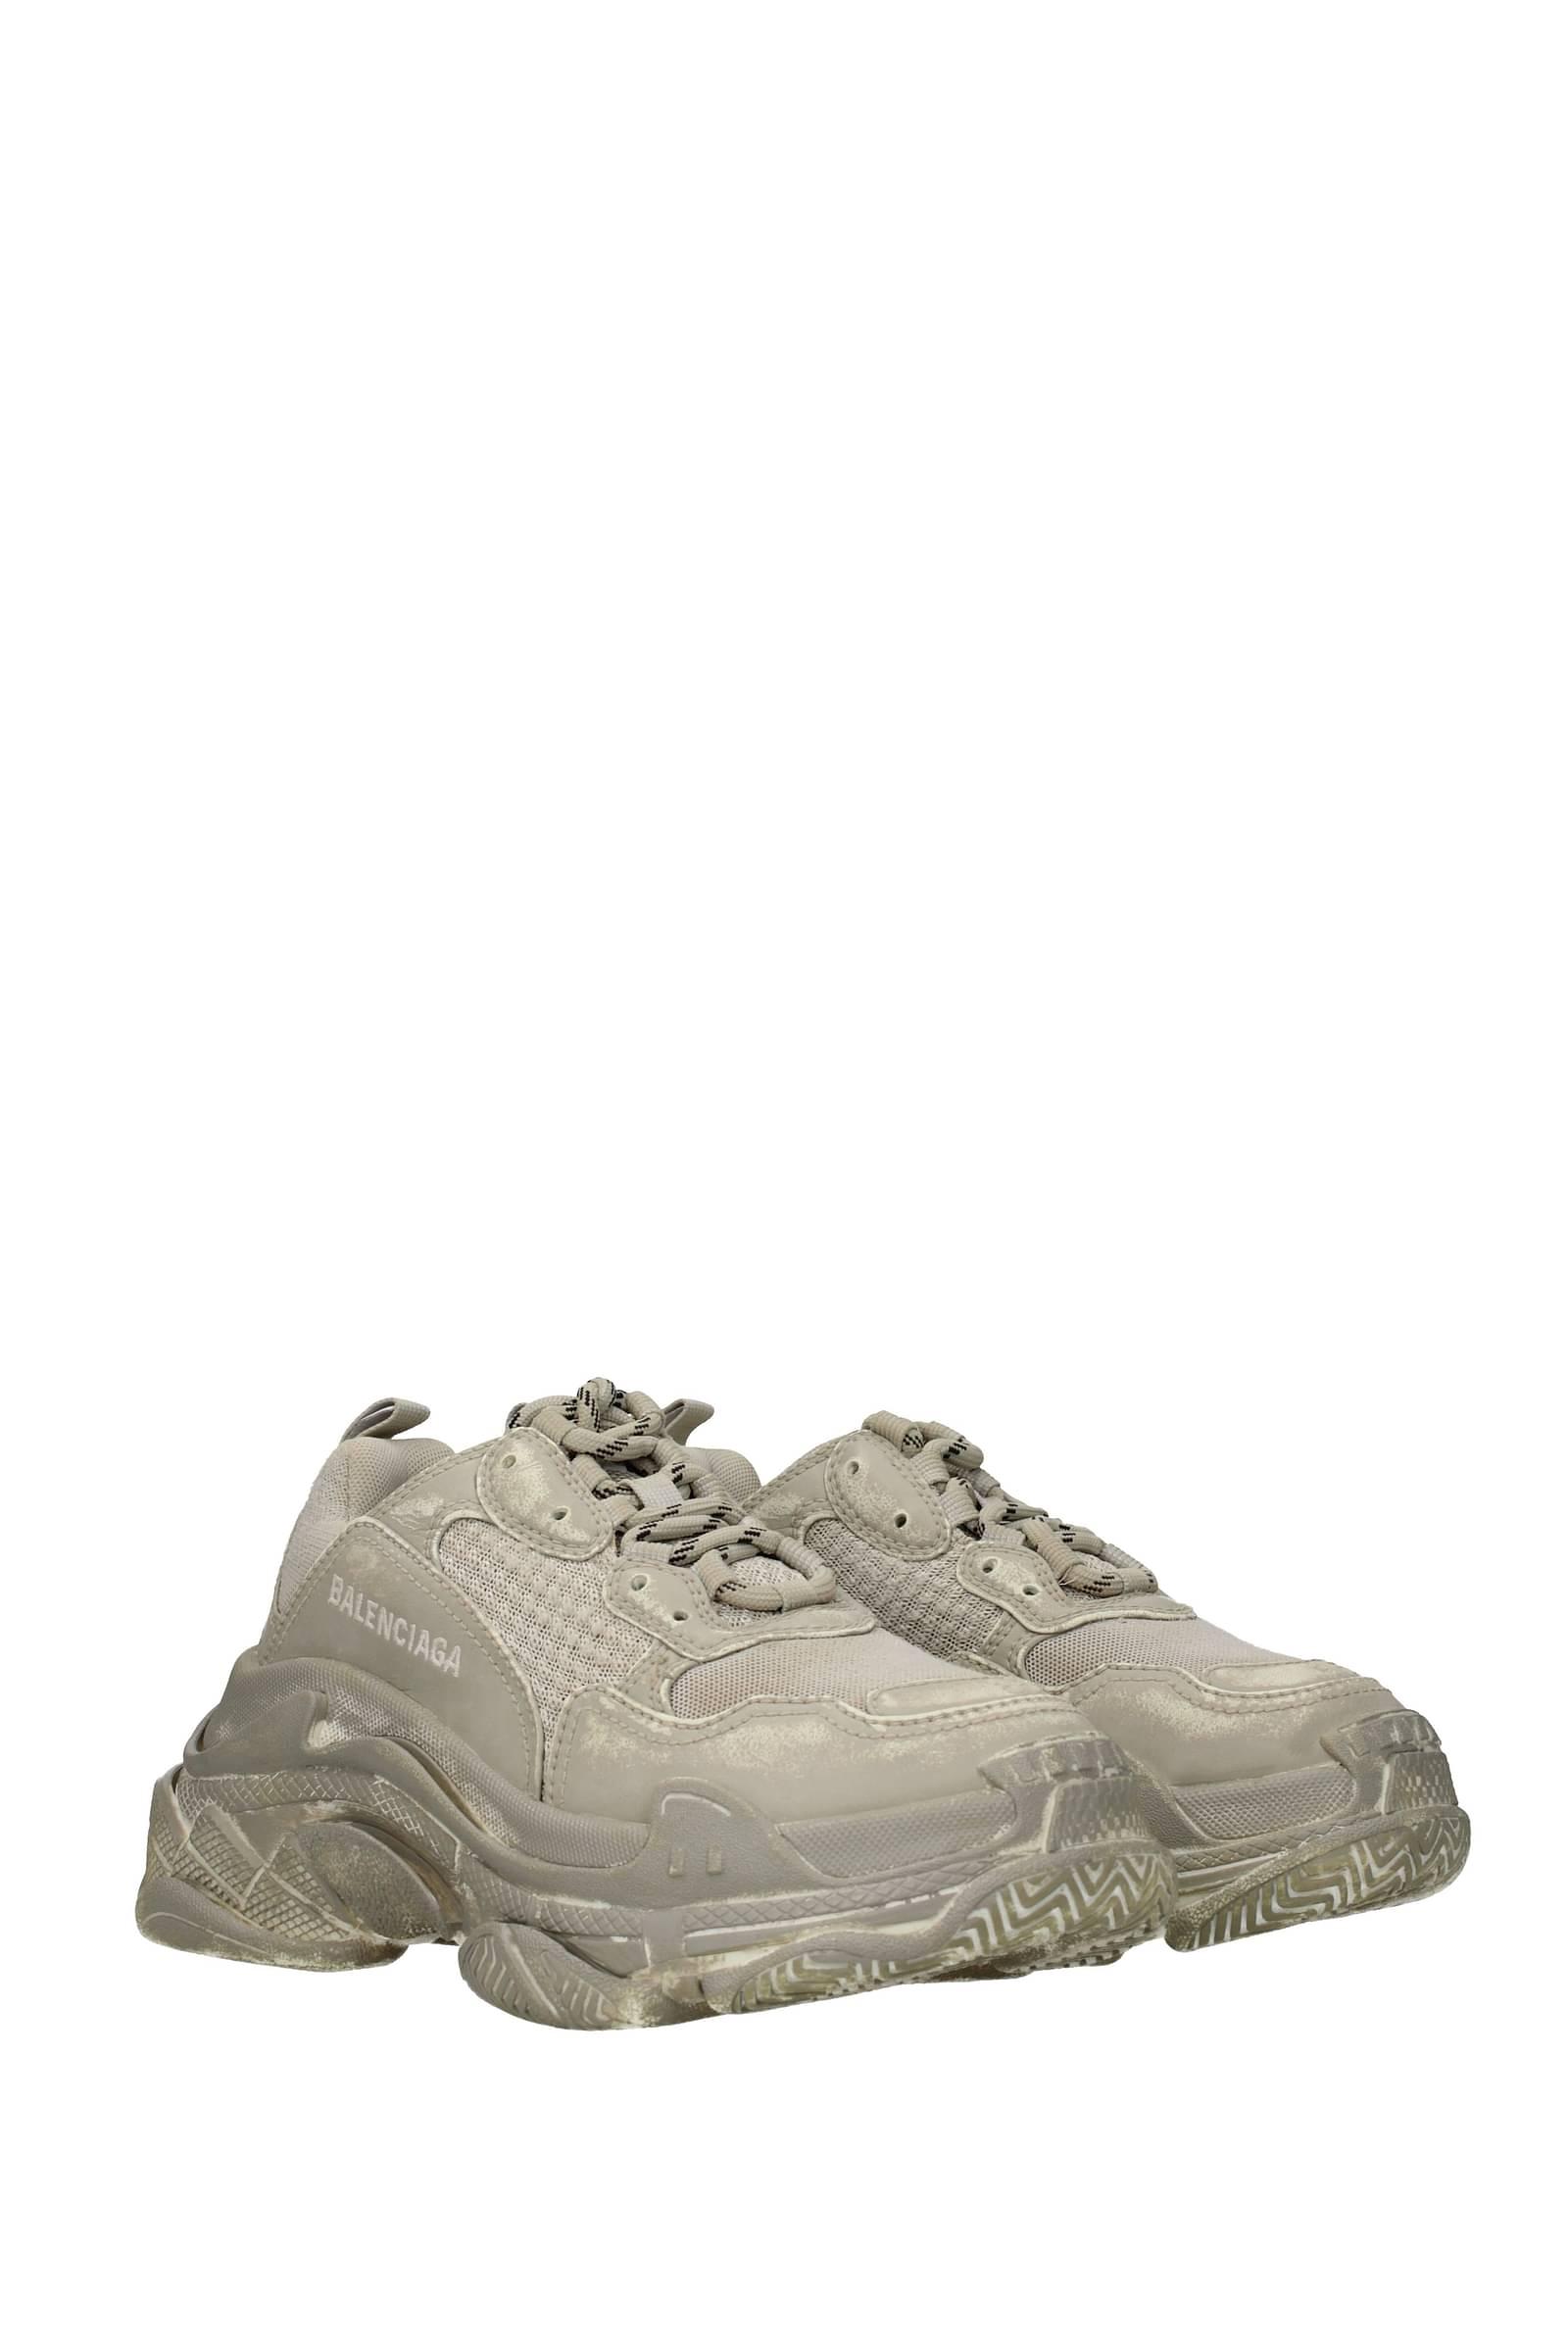 Balenciaga Sneakers Triple S Fabric Beige Light Sand in Gray | Lyst